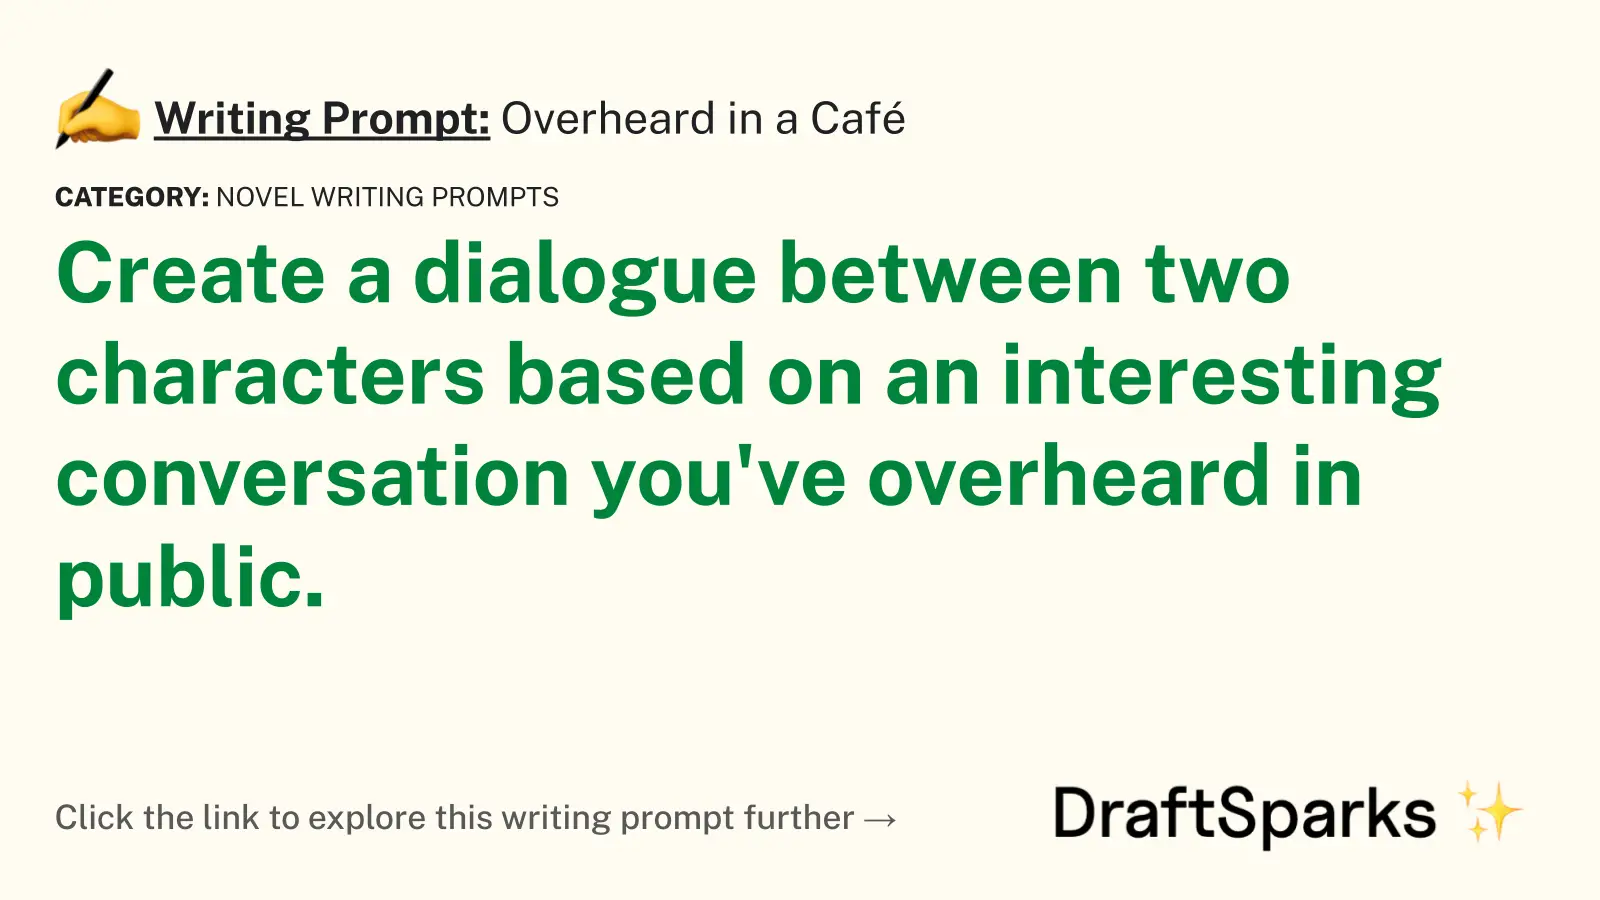 Overheard in a Café